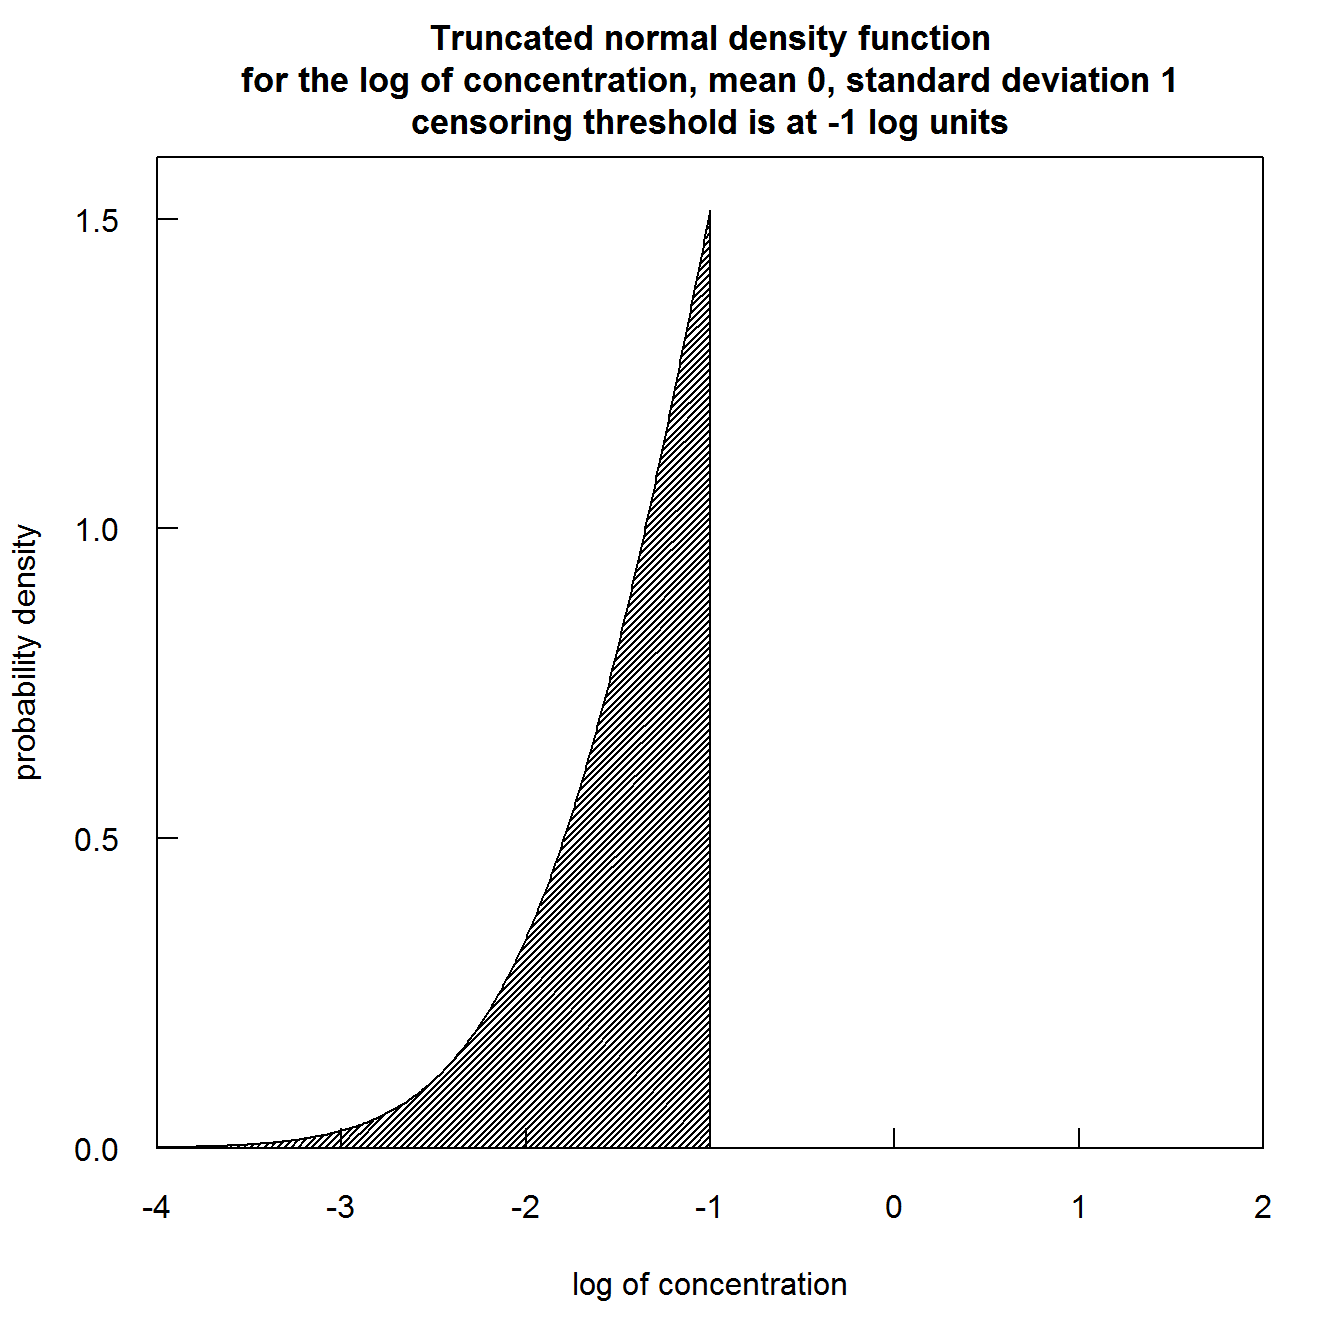 Truncated normal distribution images